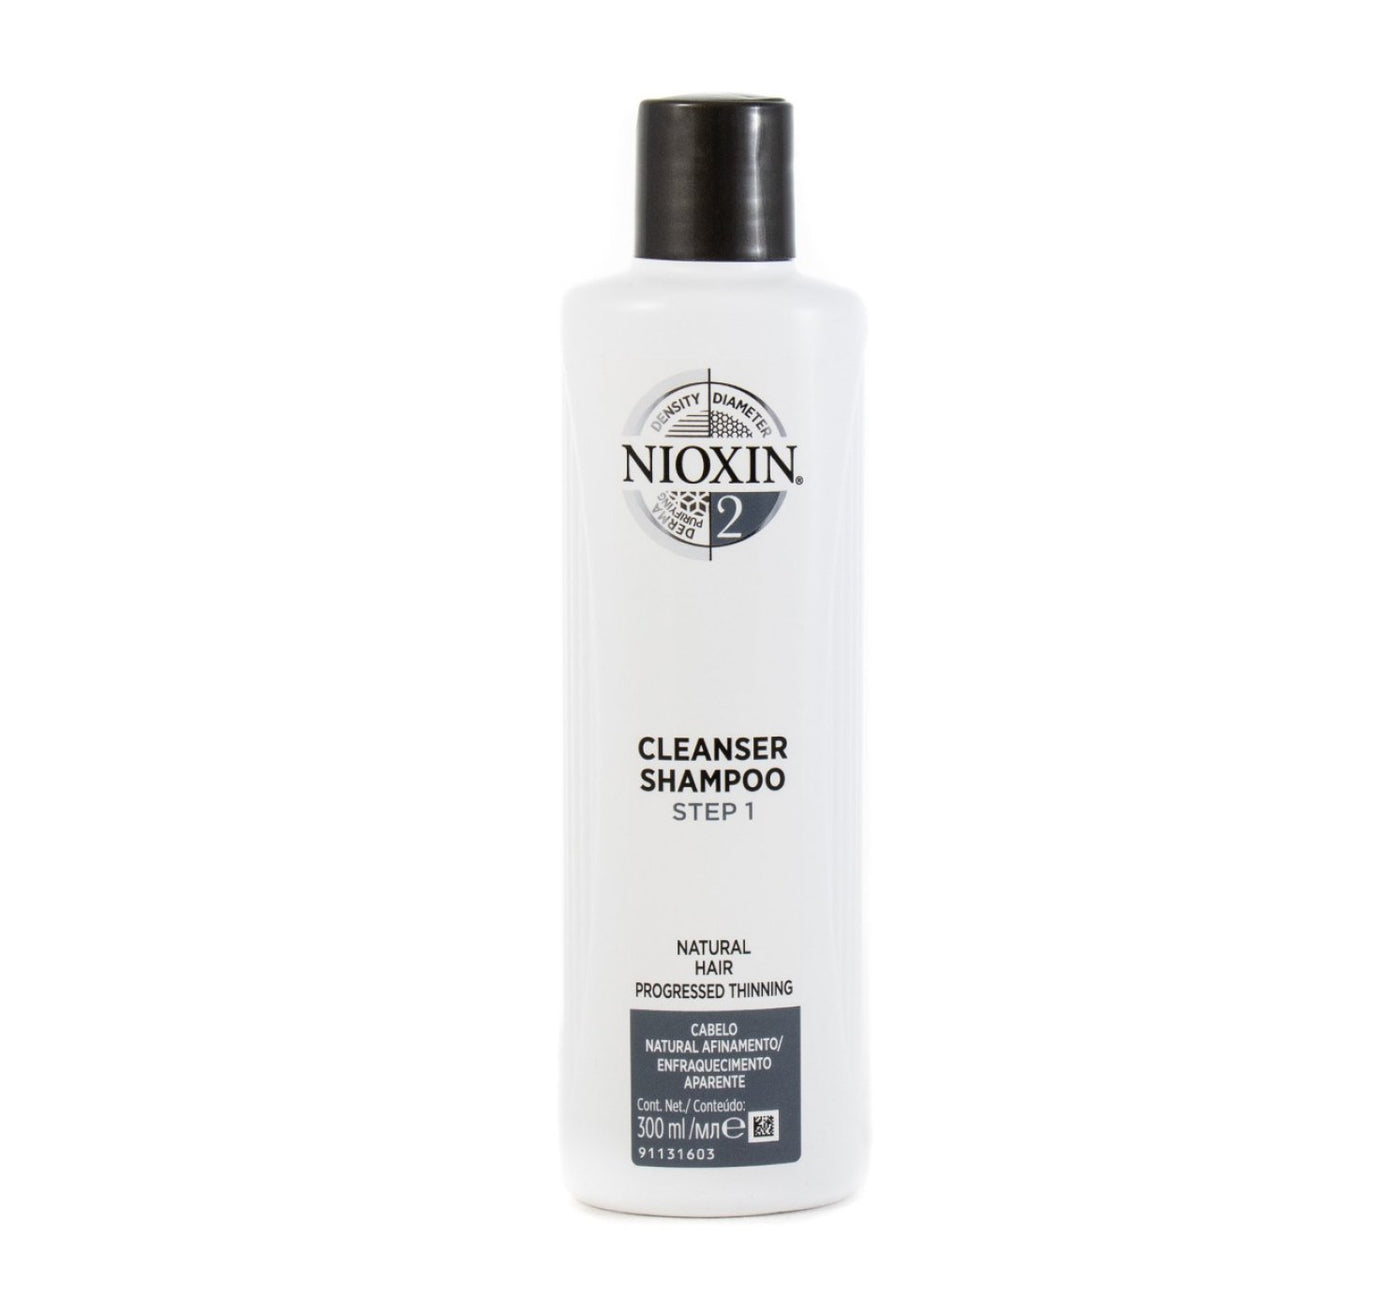 Nioxin System 2 Cleanser Shampoo 300ml - Salon Warehouse